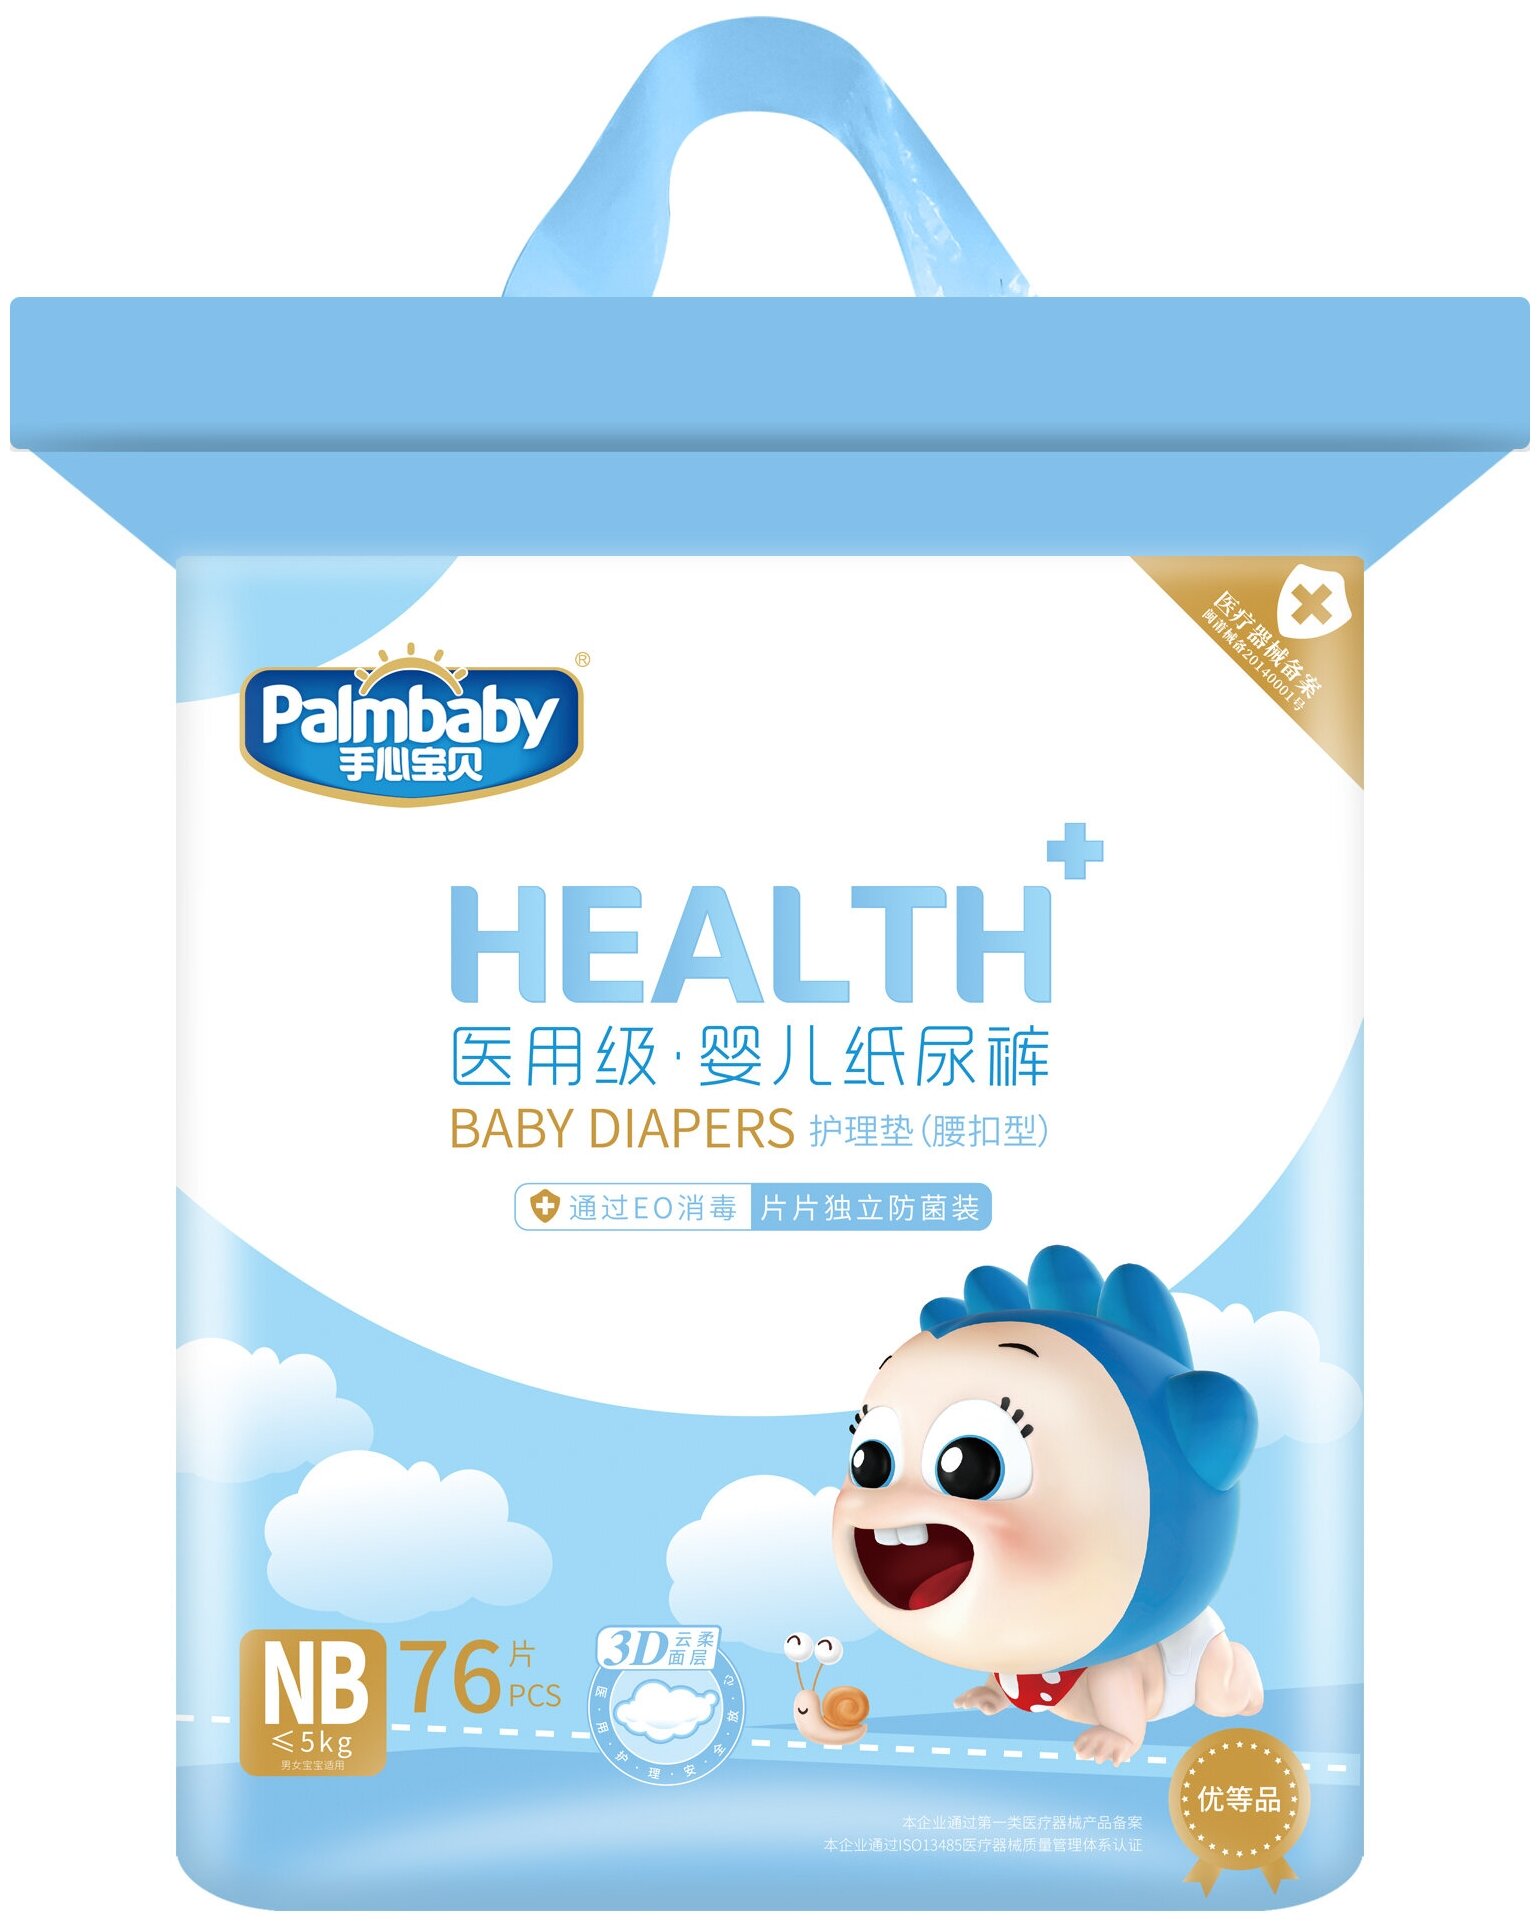 Palmbaby Подгузники детские Palmbaby HEALTH+ NB (до 5 кг), 76 шт